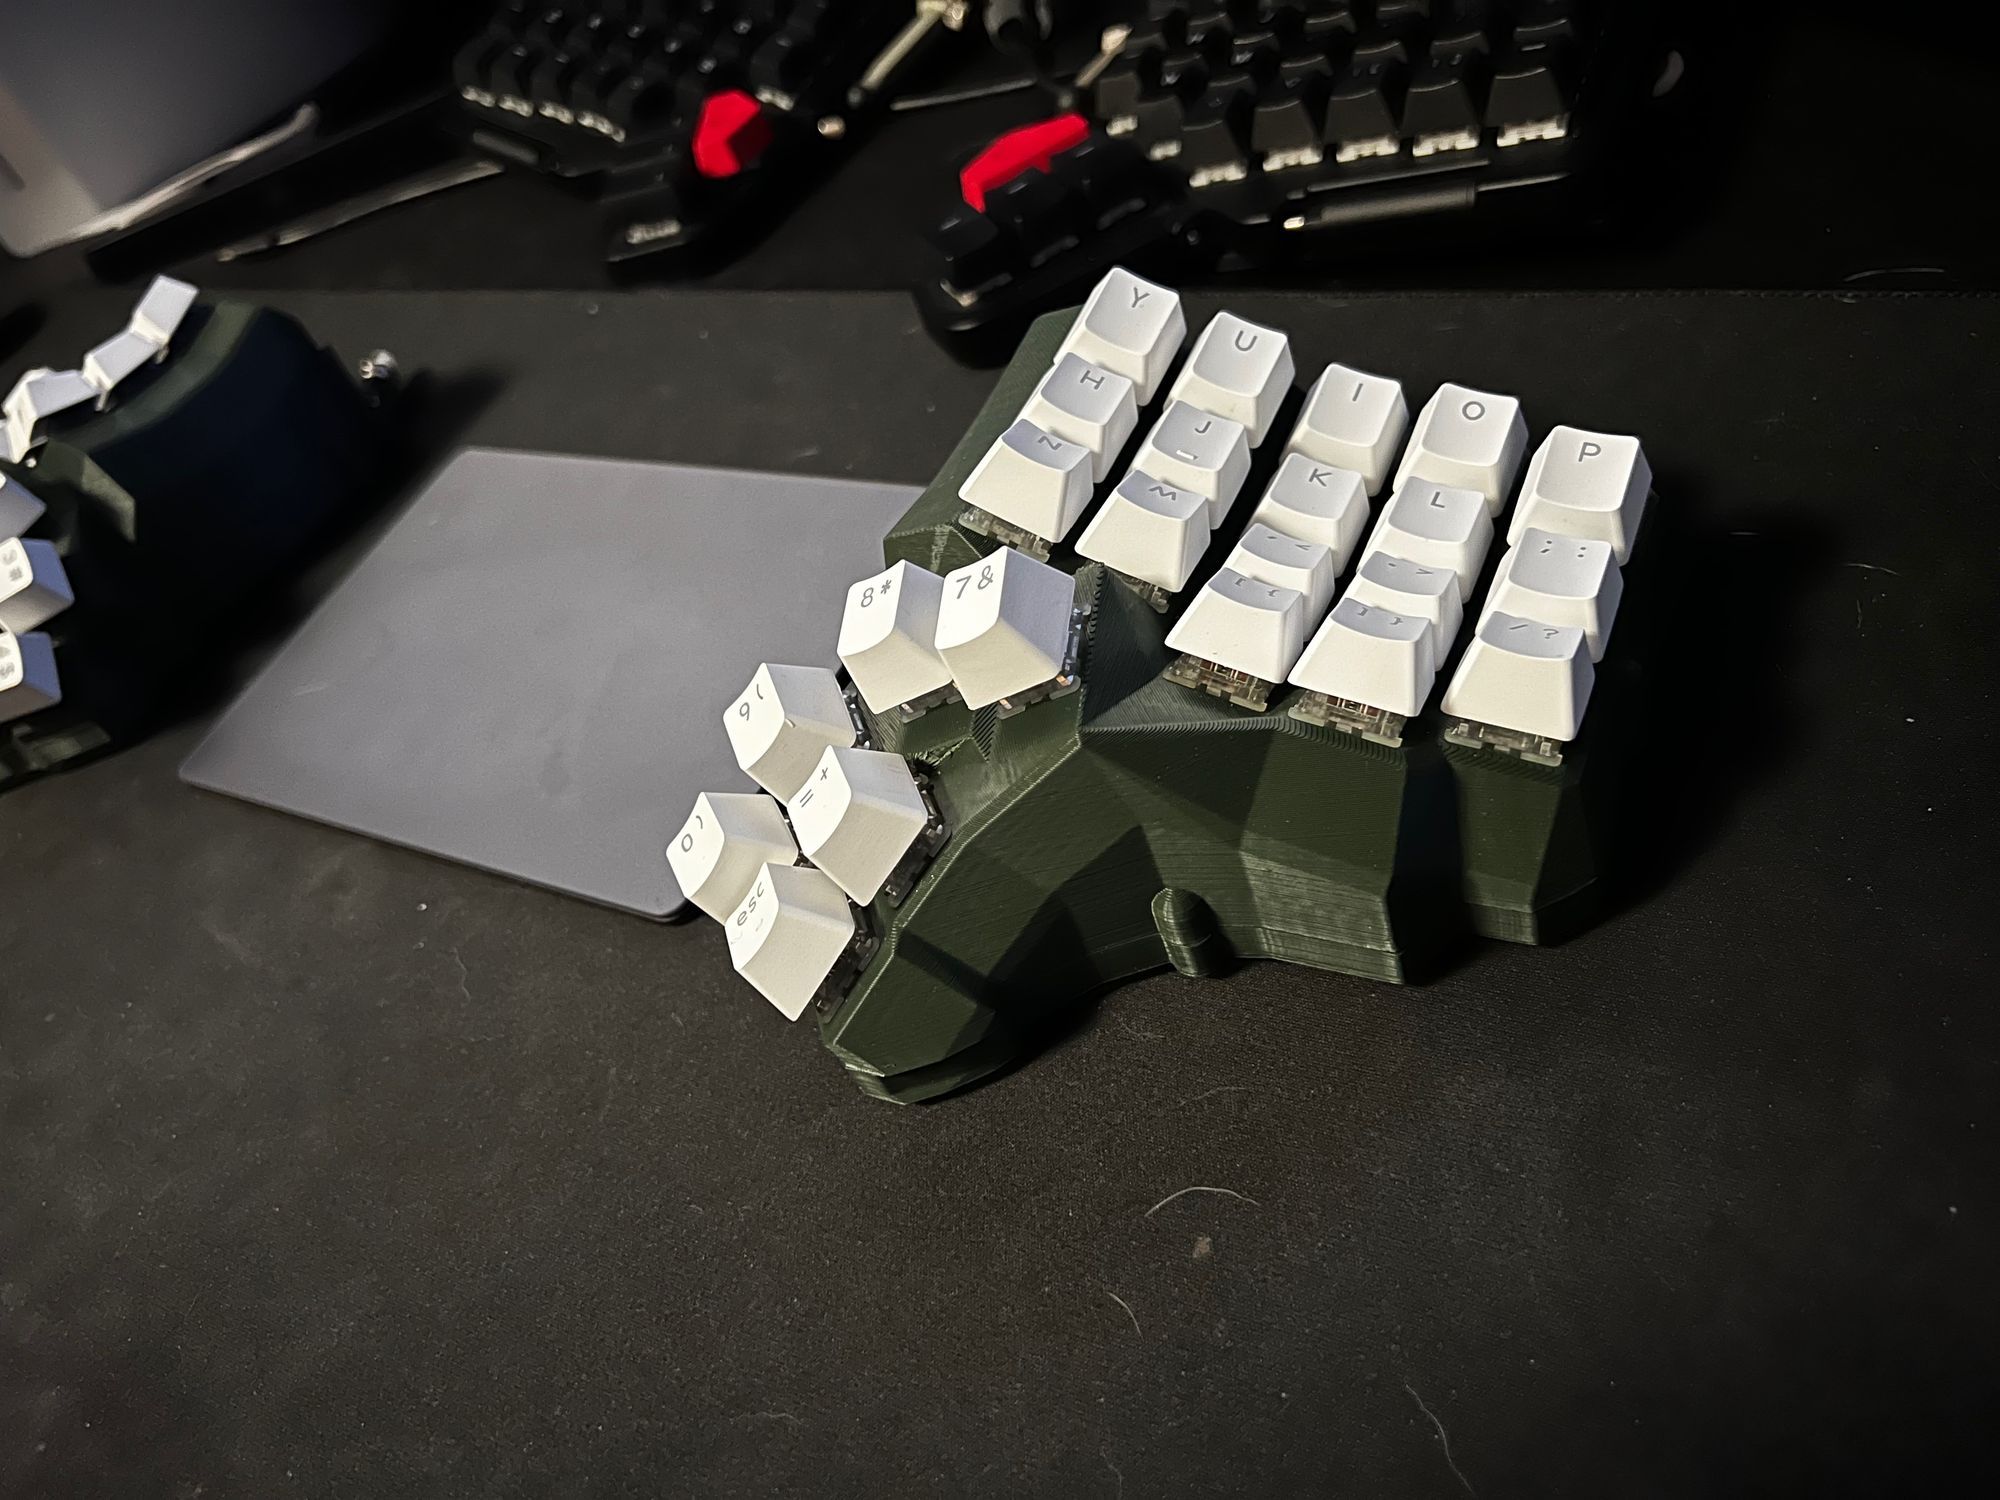 Building a custom wireless ergonomic keyboard